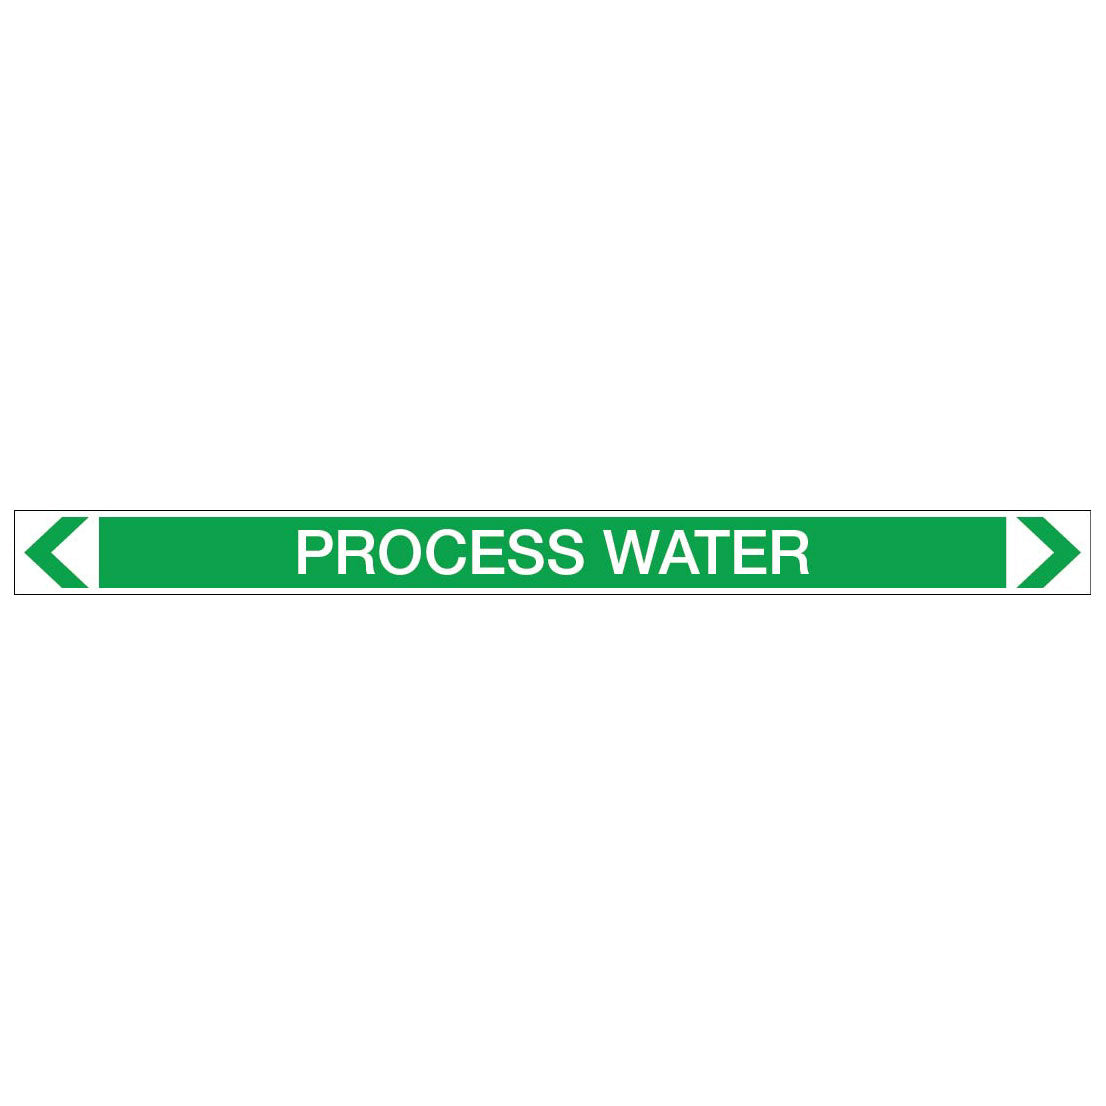 Water - Process Water - Pipe Marker Sticker